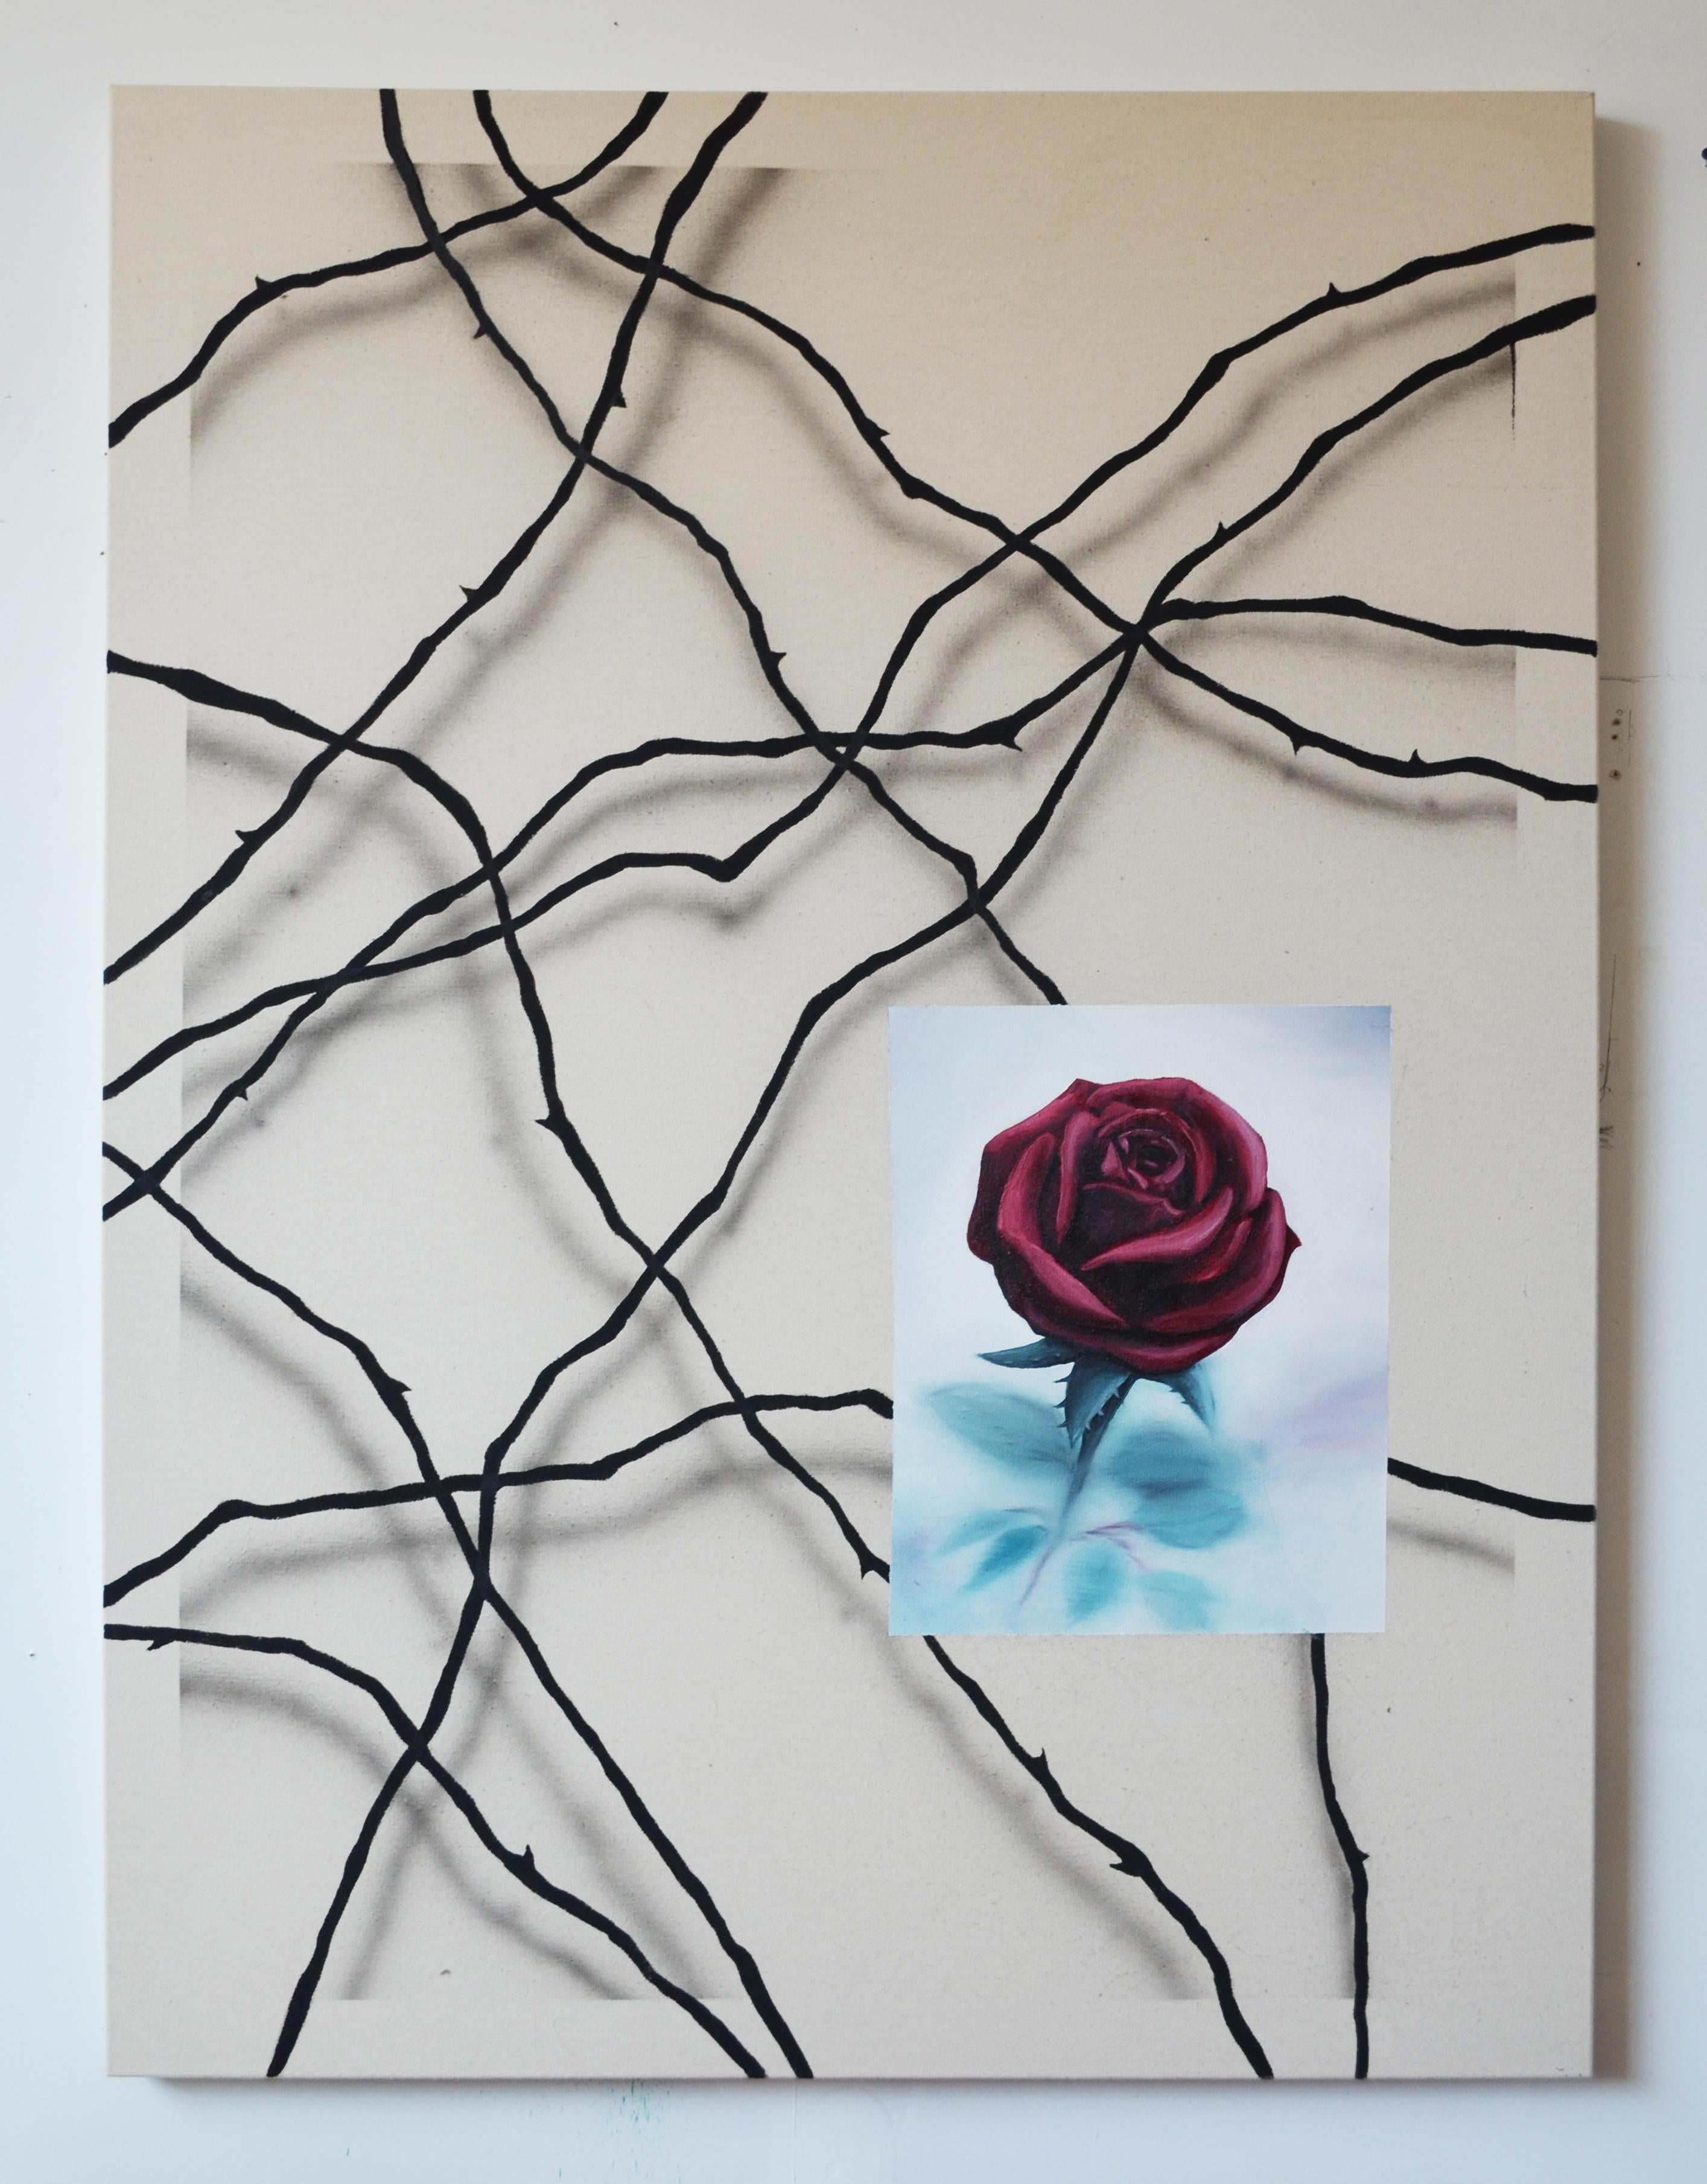 Qijun Li Still-Life Painting - Rose on a bed of thorns, Oil & acrylic on canvas, 120cm x 90cm, 2019